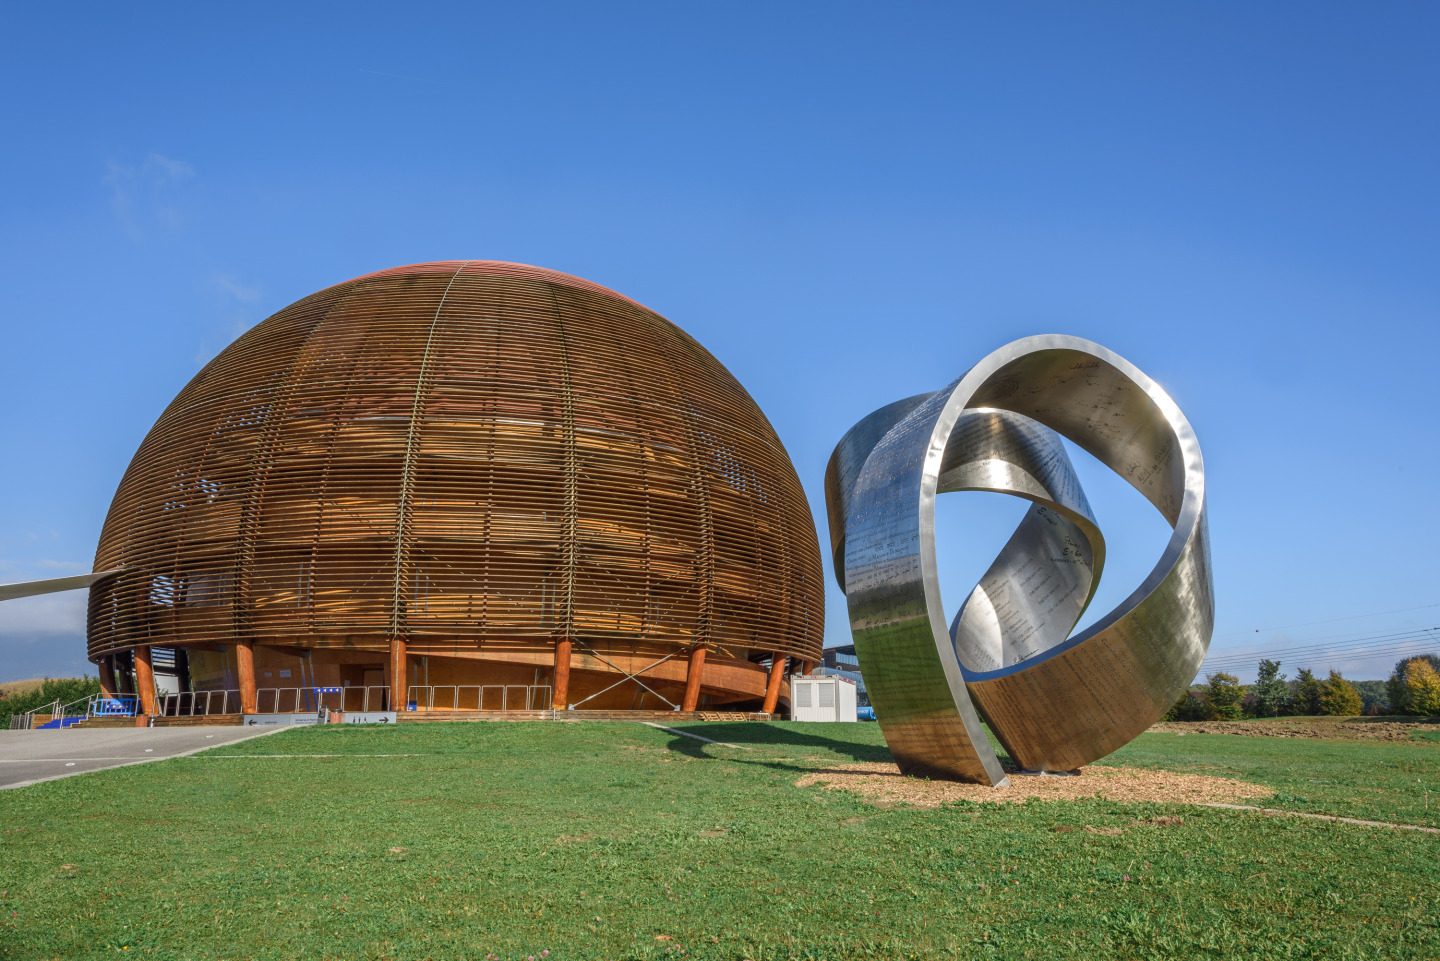 CERN inaugurates steel sculpture 